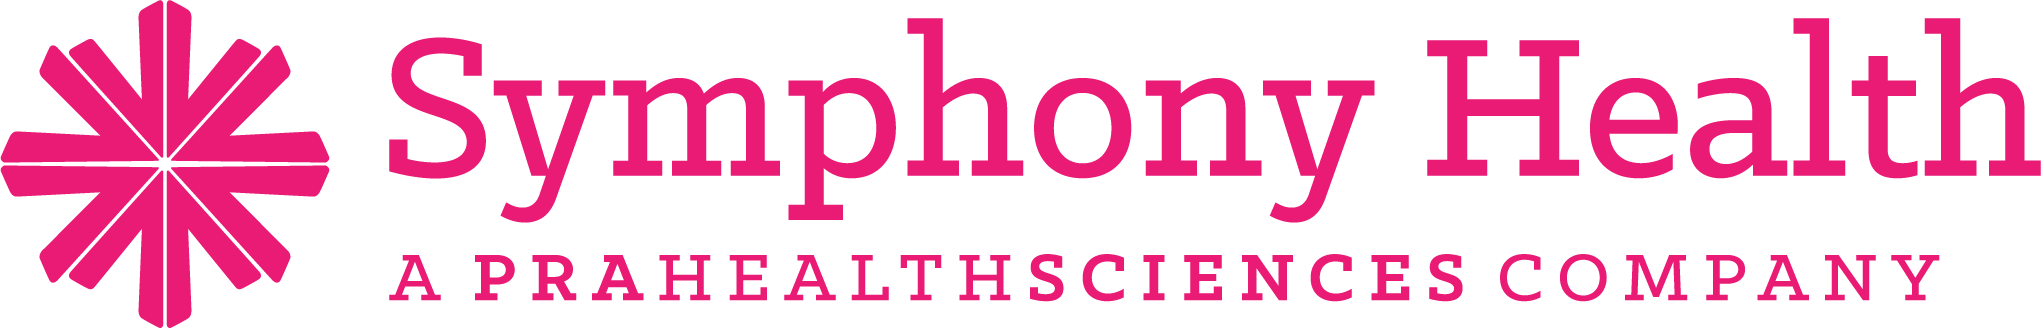 Symphony Health_Horizontal Logo_Pink.png